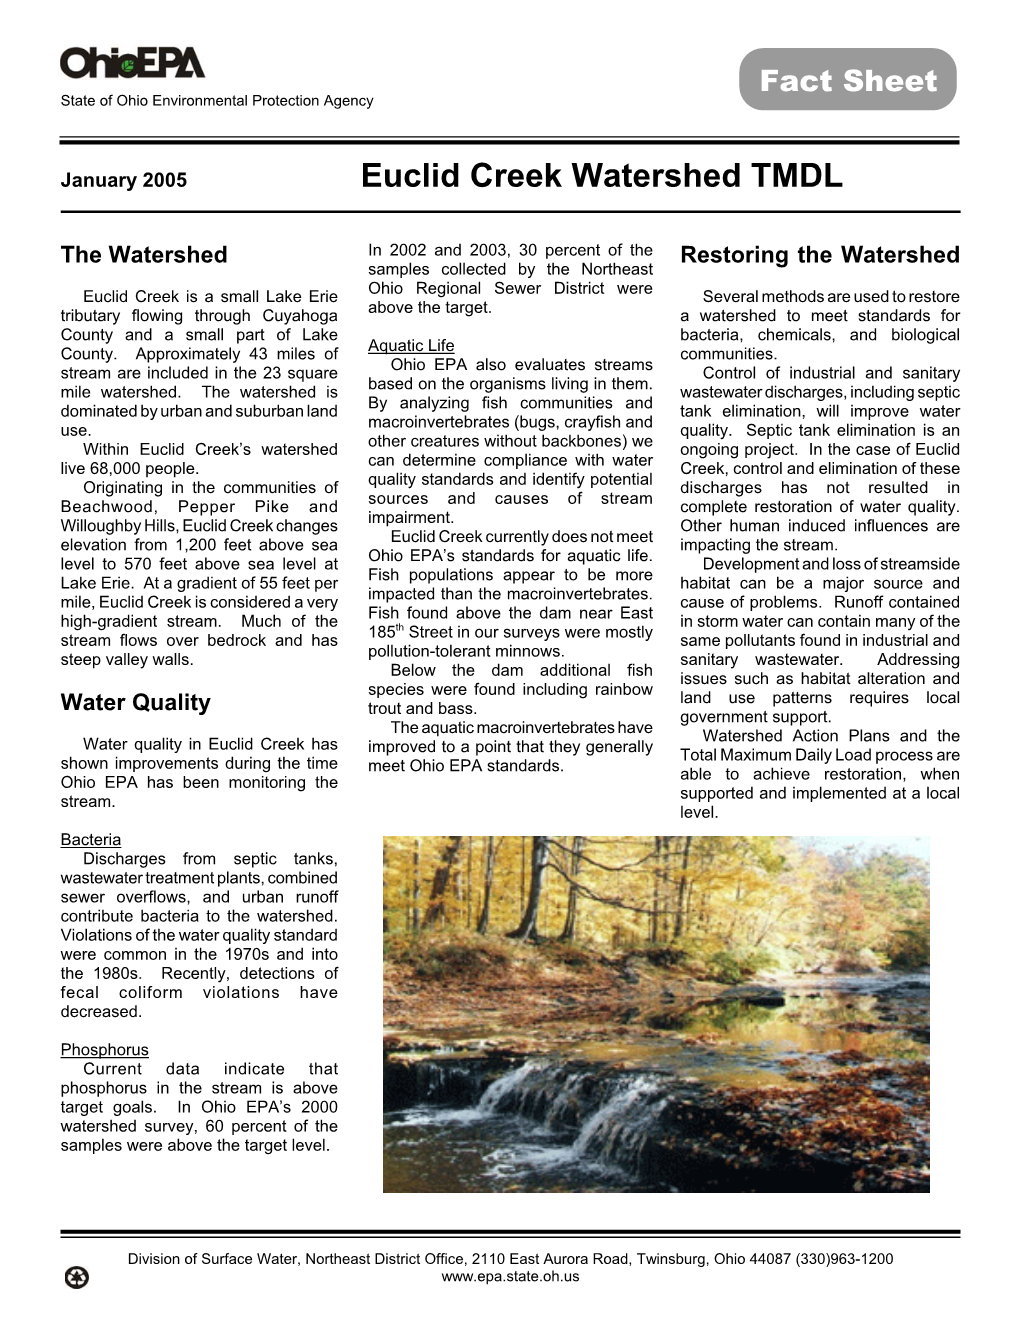 Euclid Creek Watershed TMDL